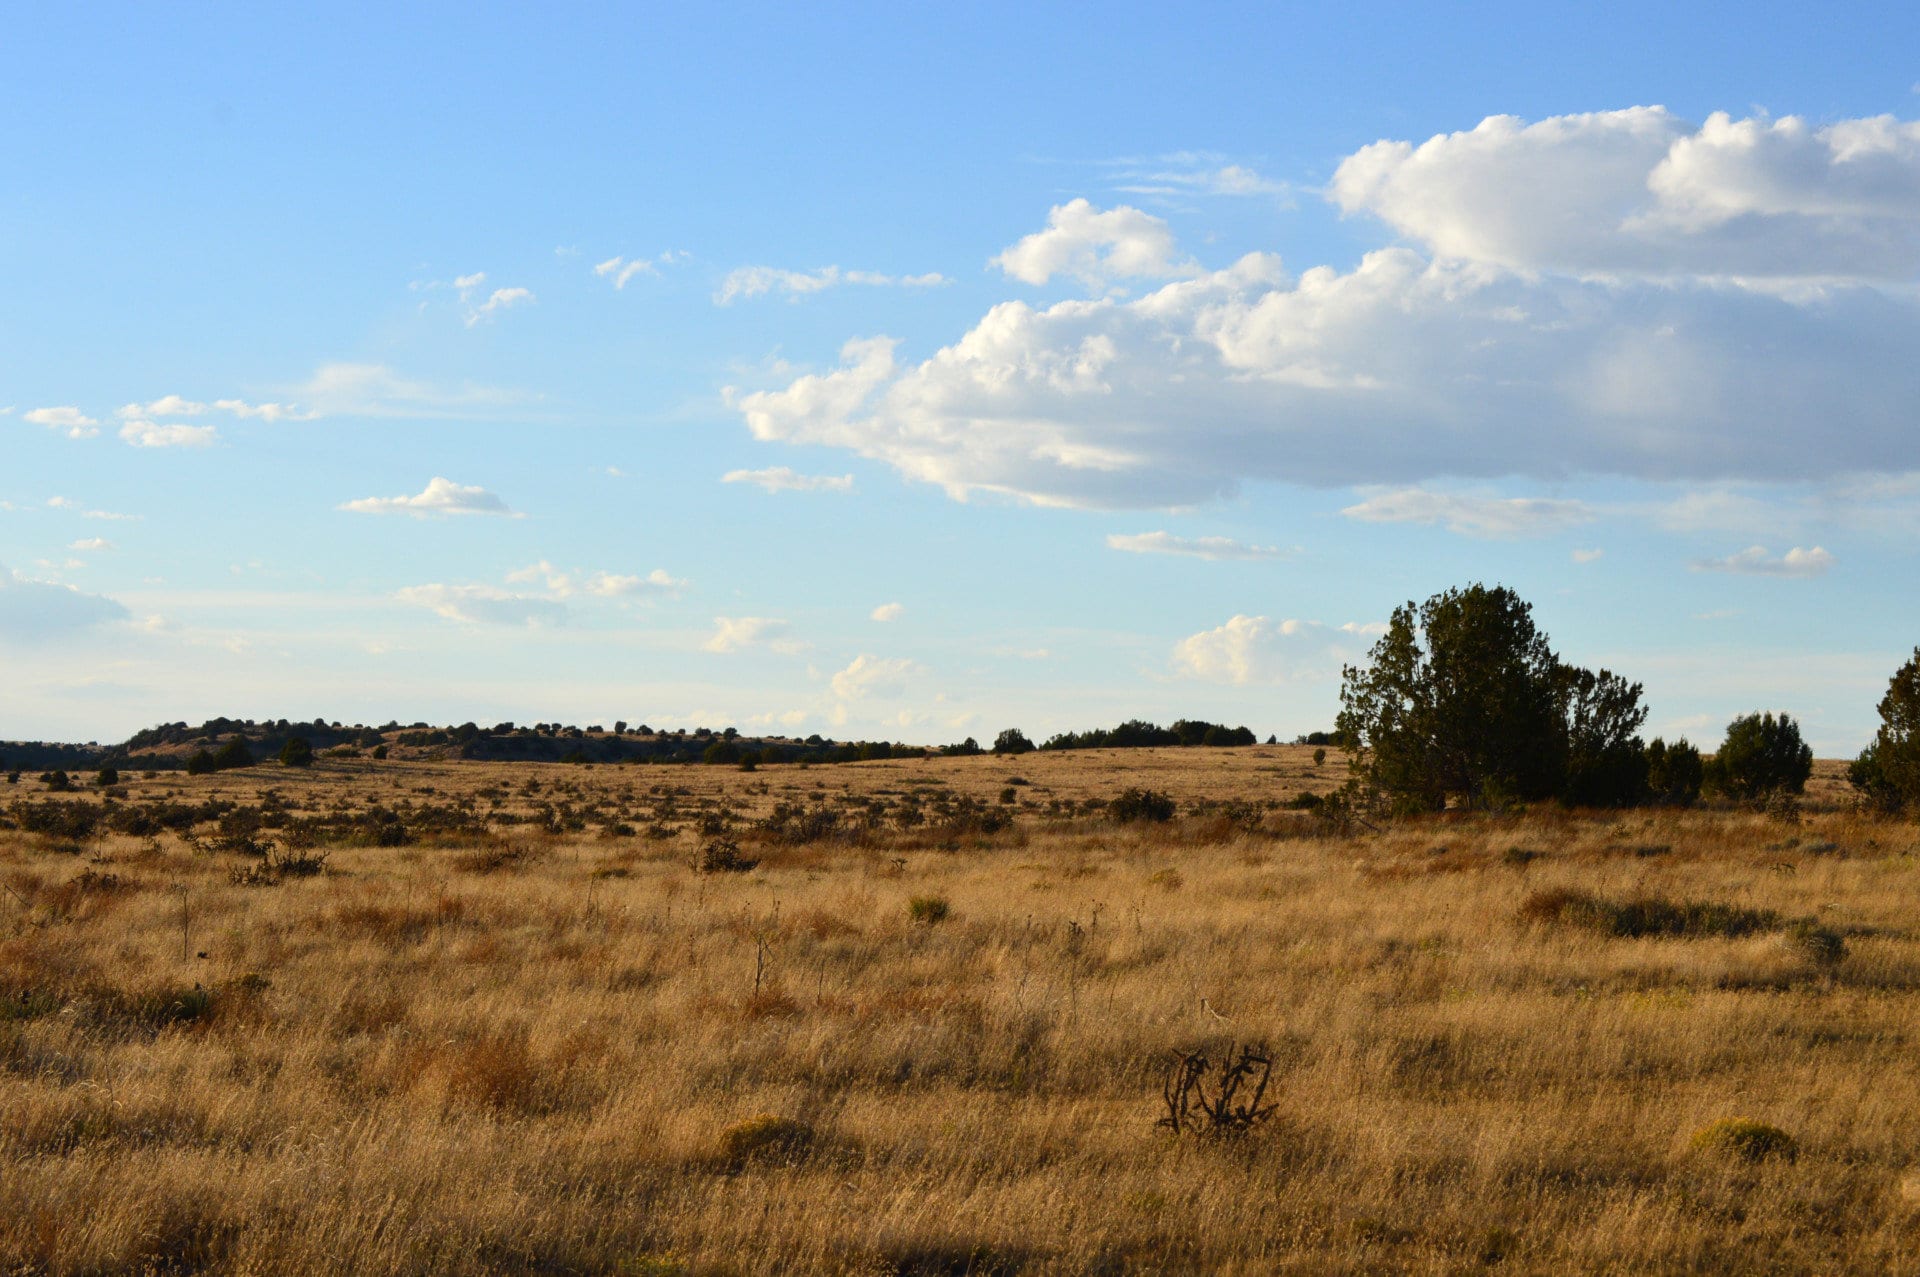 northwest view looking towards comanche grasslands colorado saddoris ranch east